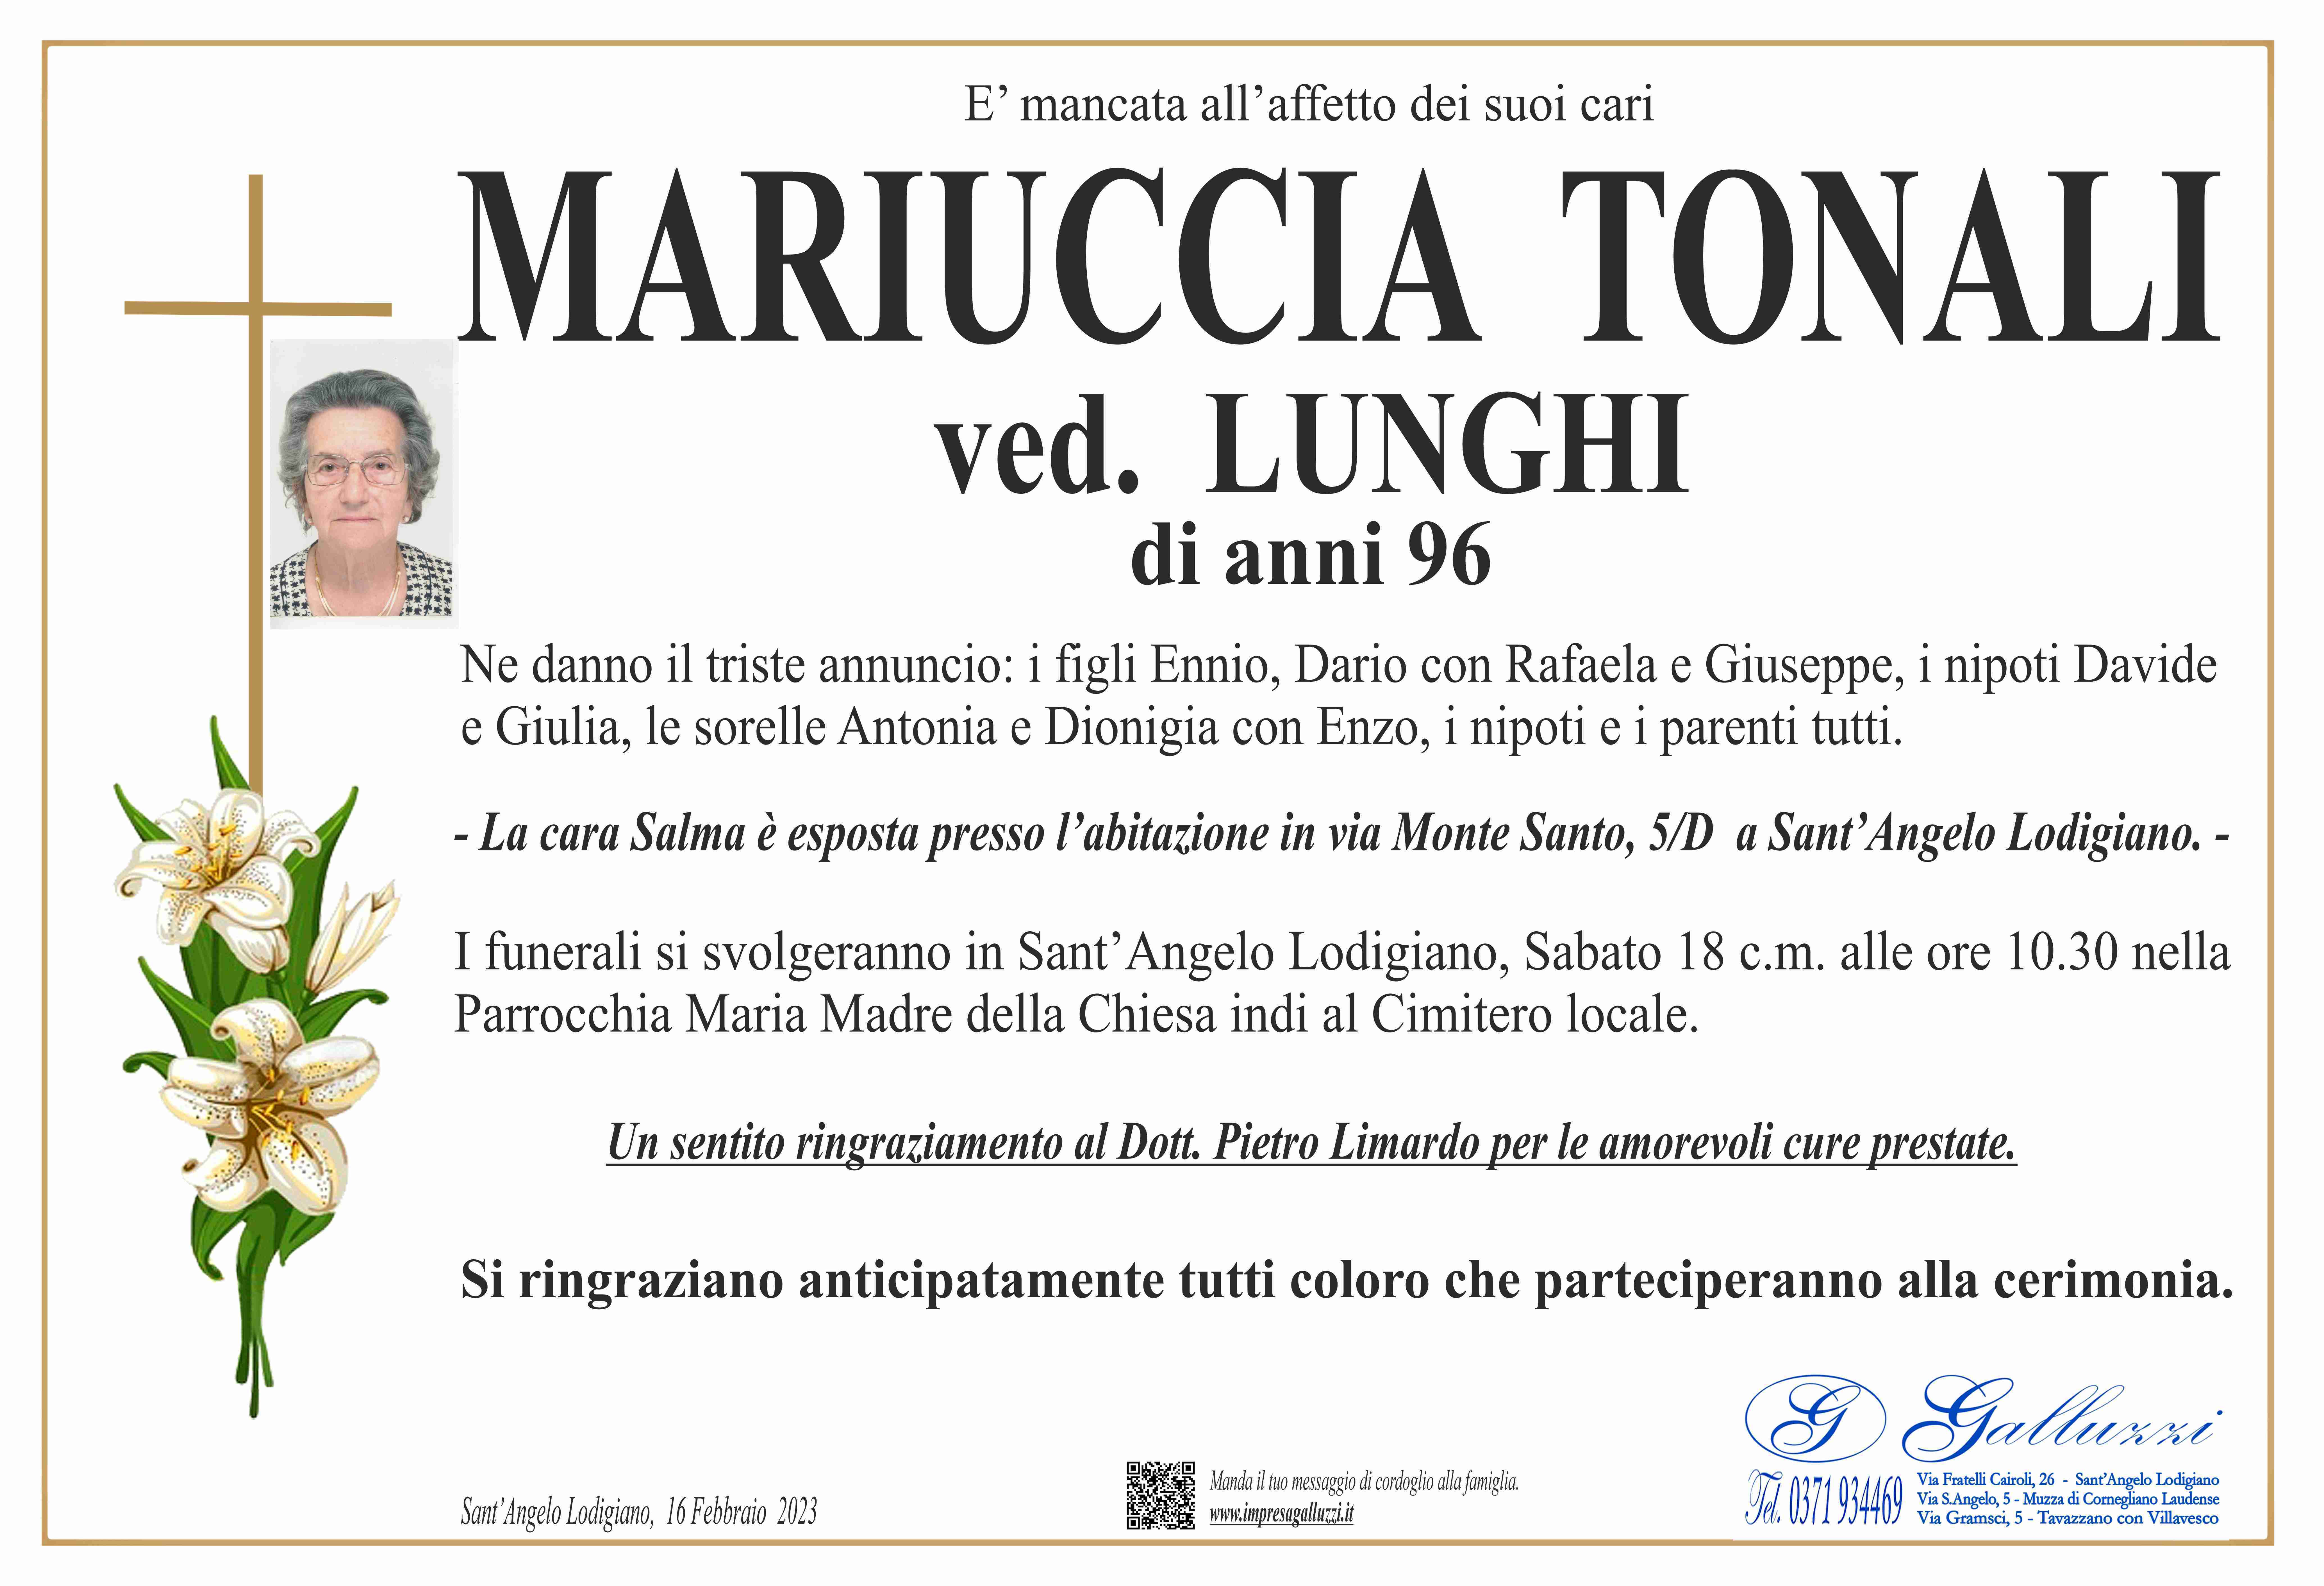 Mariuccia Tonali